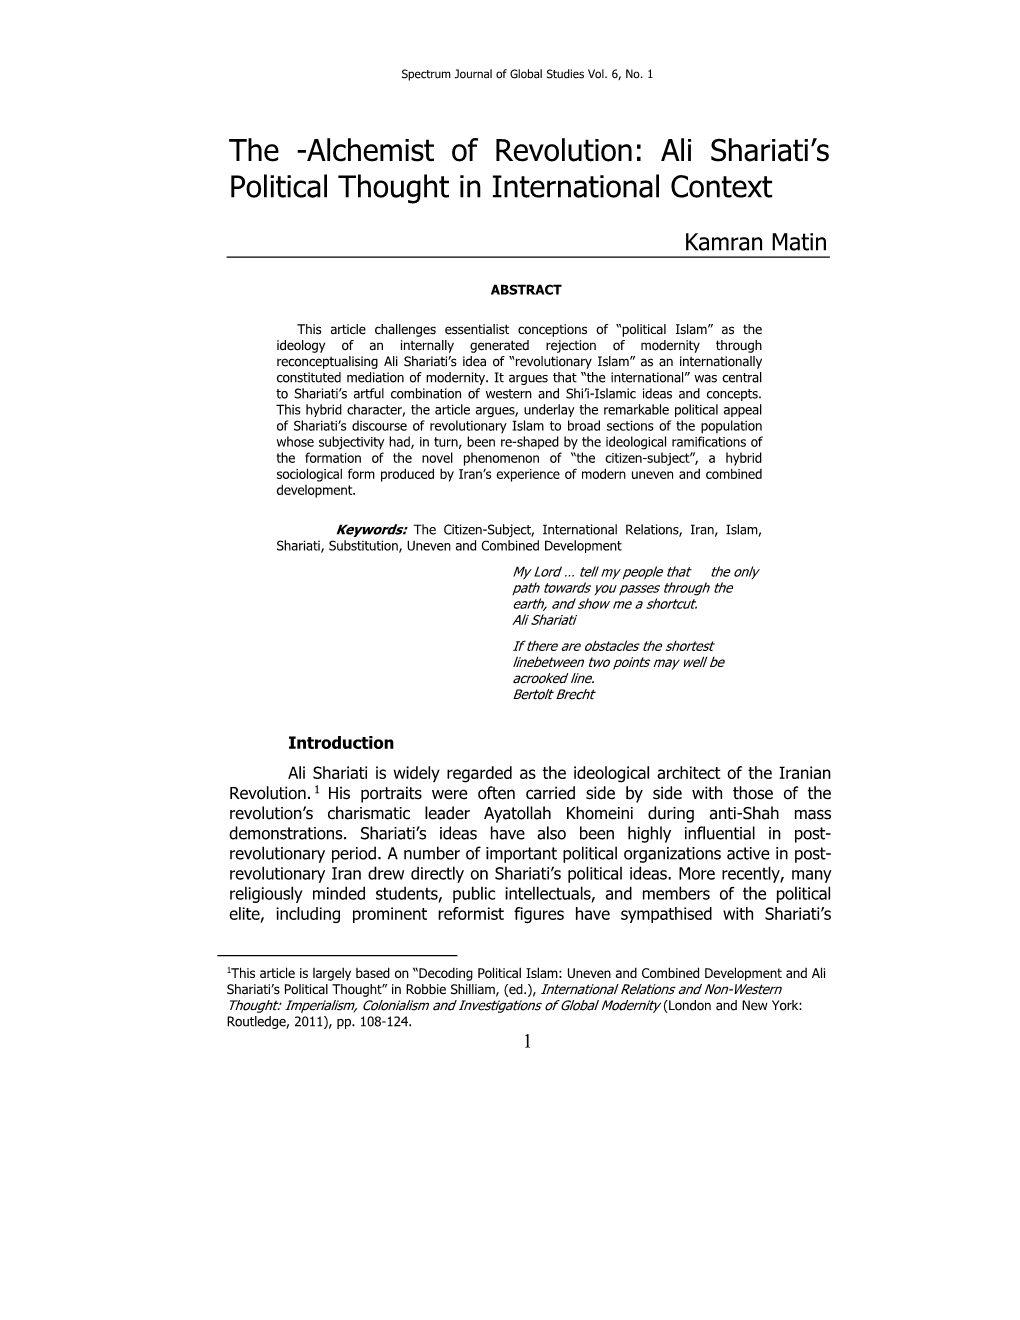 Alchemist of Revolution: Ali Shariati's Political Thought in International